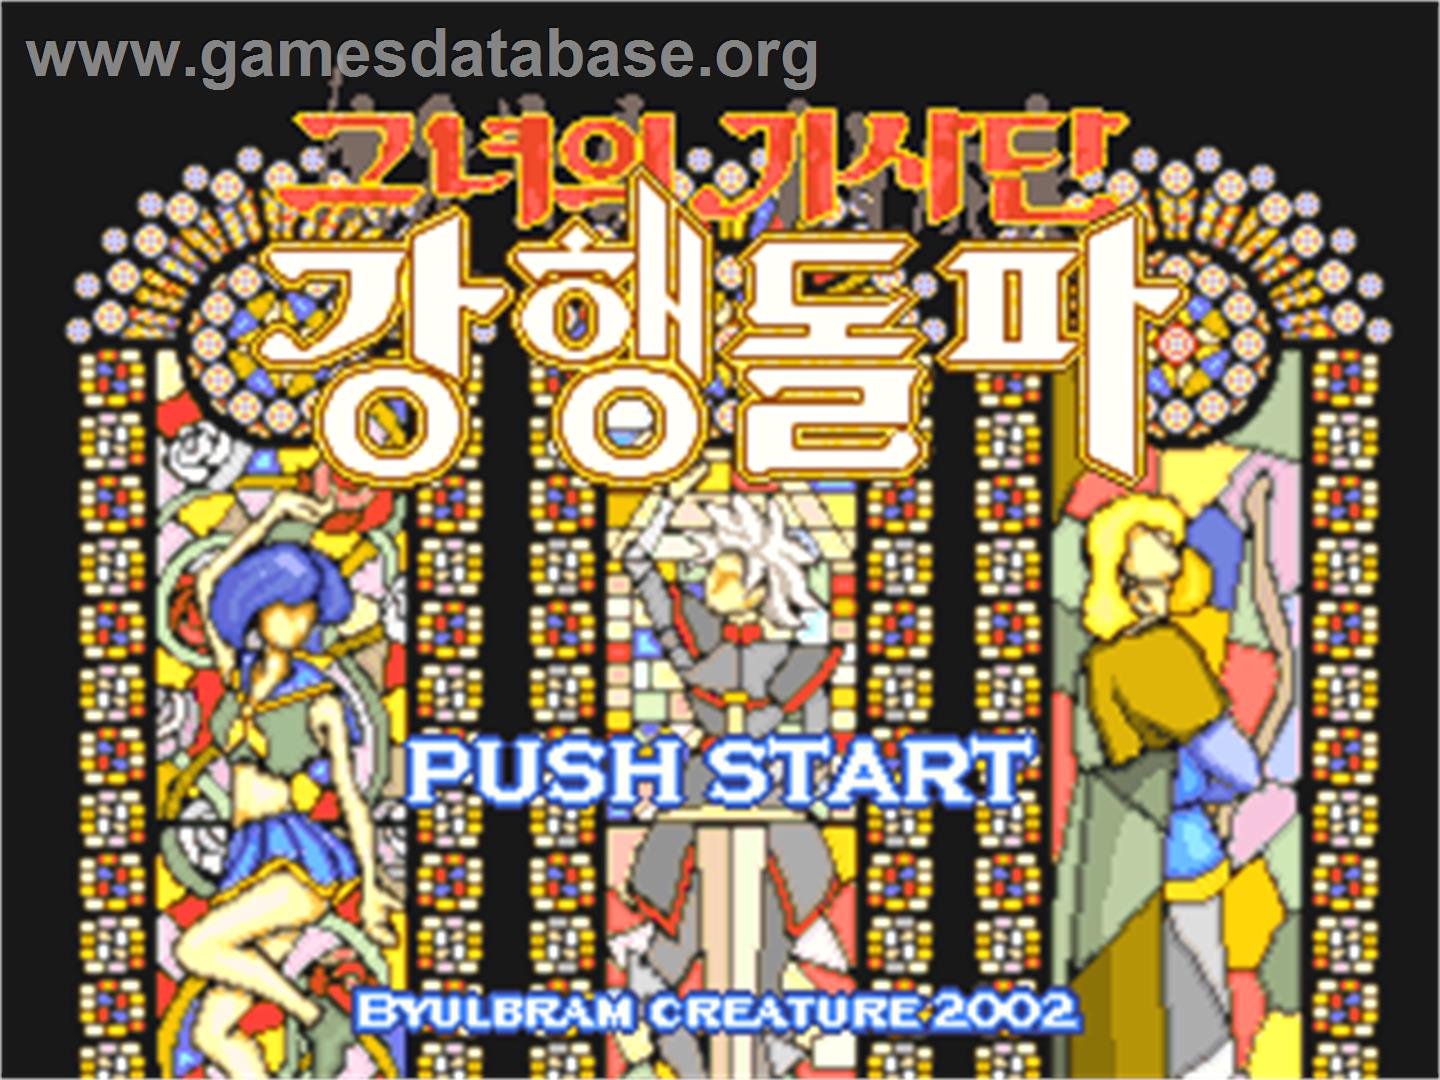 Her Knights - All for Princess - Deadline - Gamepark GP32 - Artwork - Title Screen